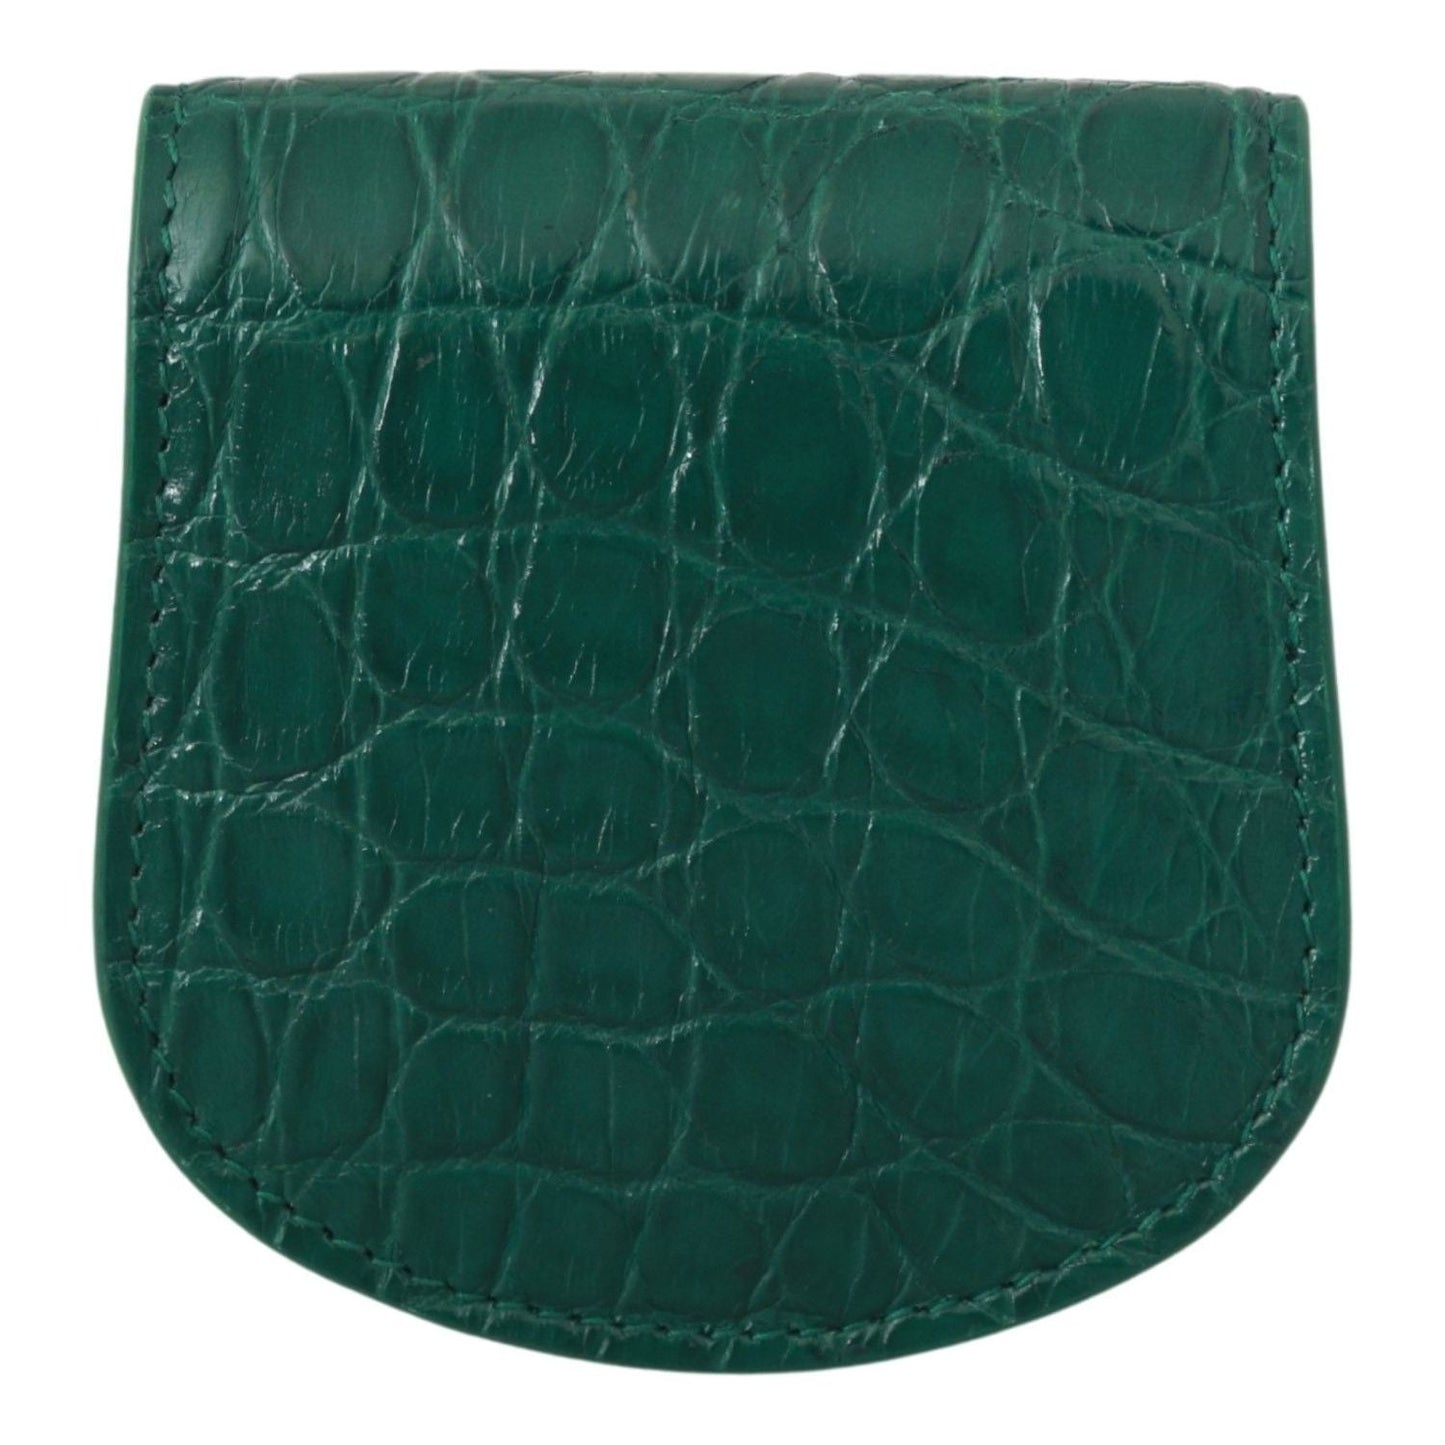 Dolce & Gabbana Exquisite Exotic Skin Coin Case Wallet green-exotic-skins-condom-case-holder-wallet Condom Case IMG_0222-1-963f6d31-954.jpg